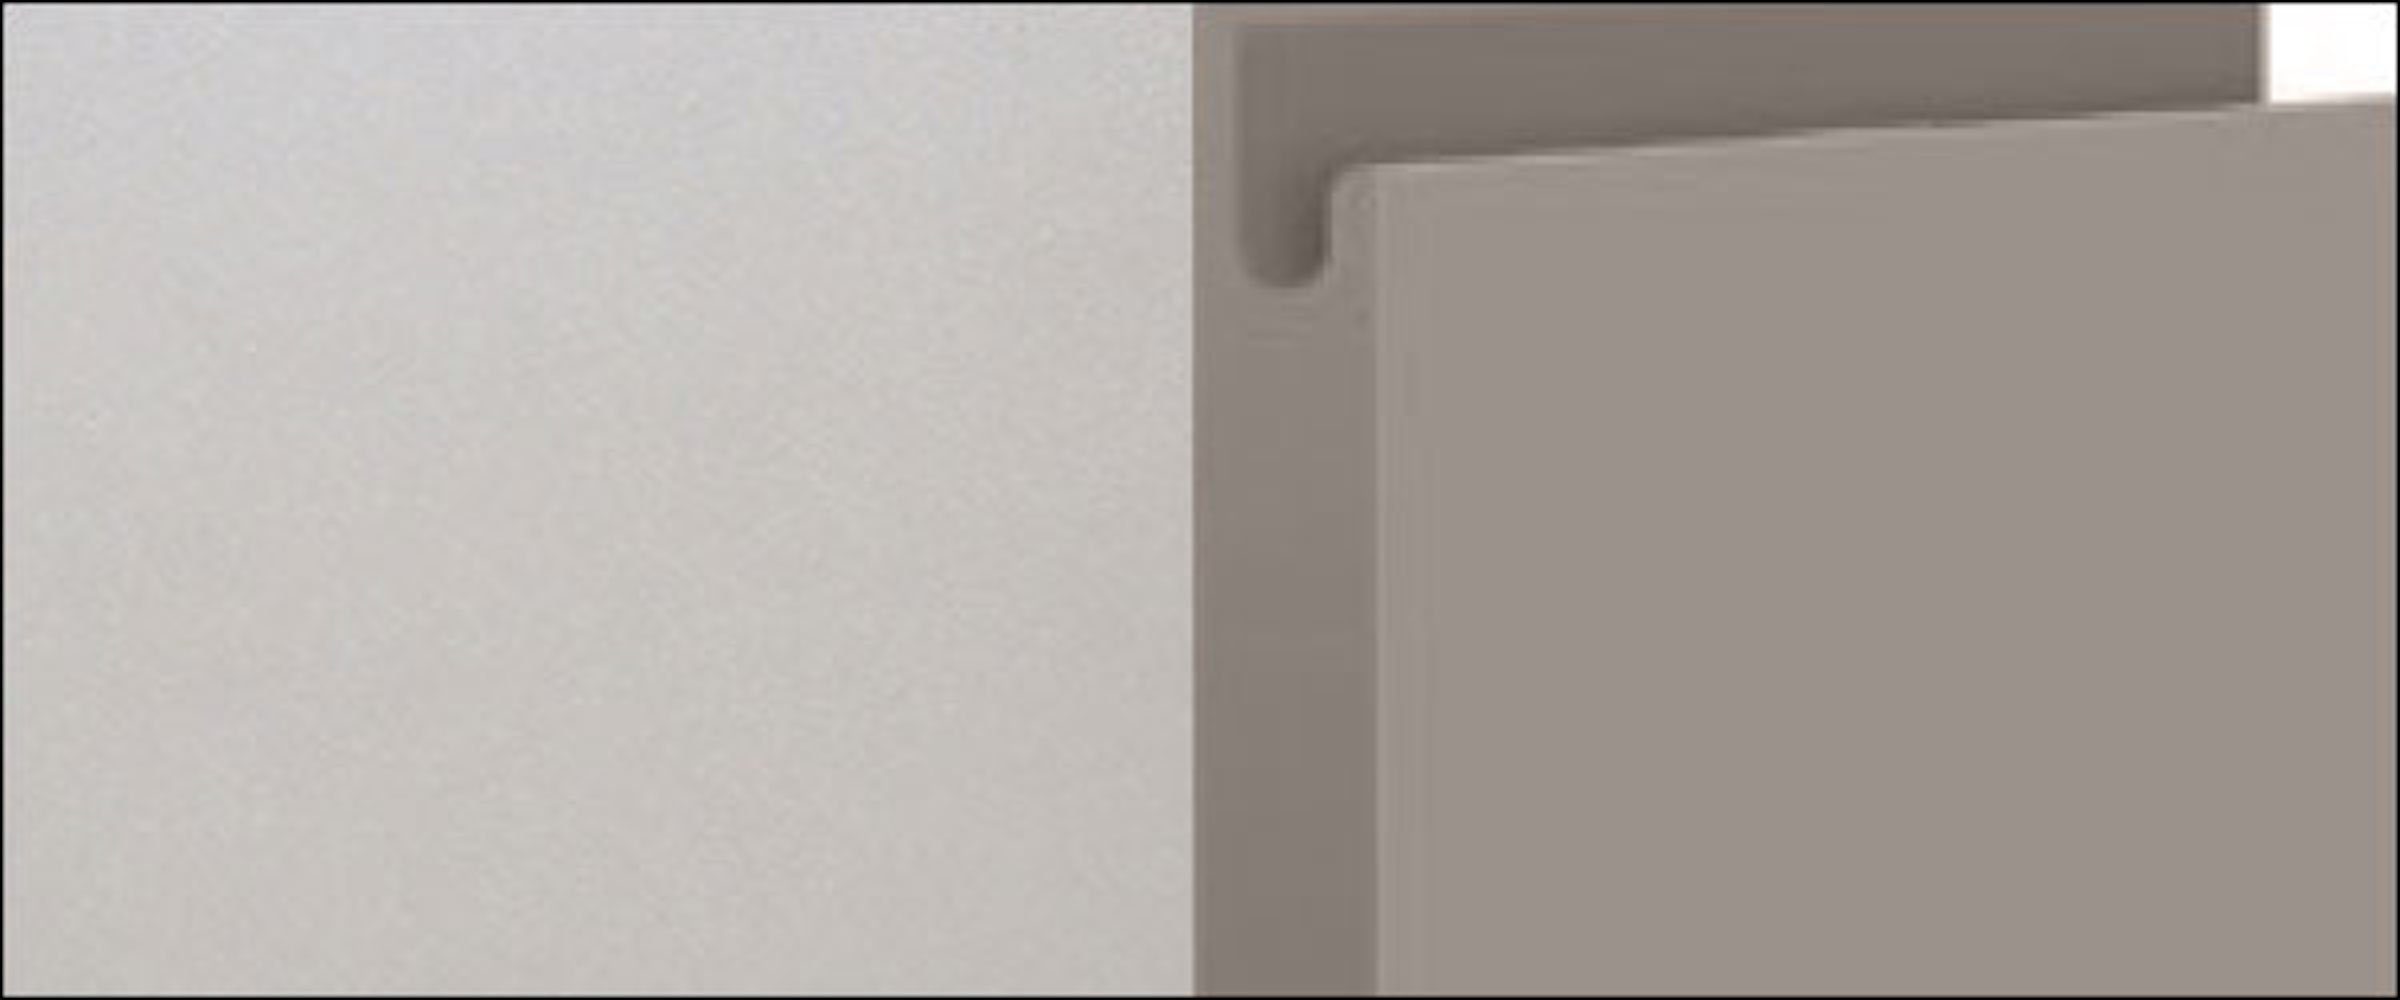 Ausführung Acryl wählbar grey Avellino Feldmann-Wohnen Front-, 15cm grifflos matt stone & Korbauszug Unterschrank Korpusfarbe